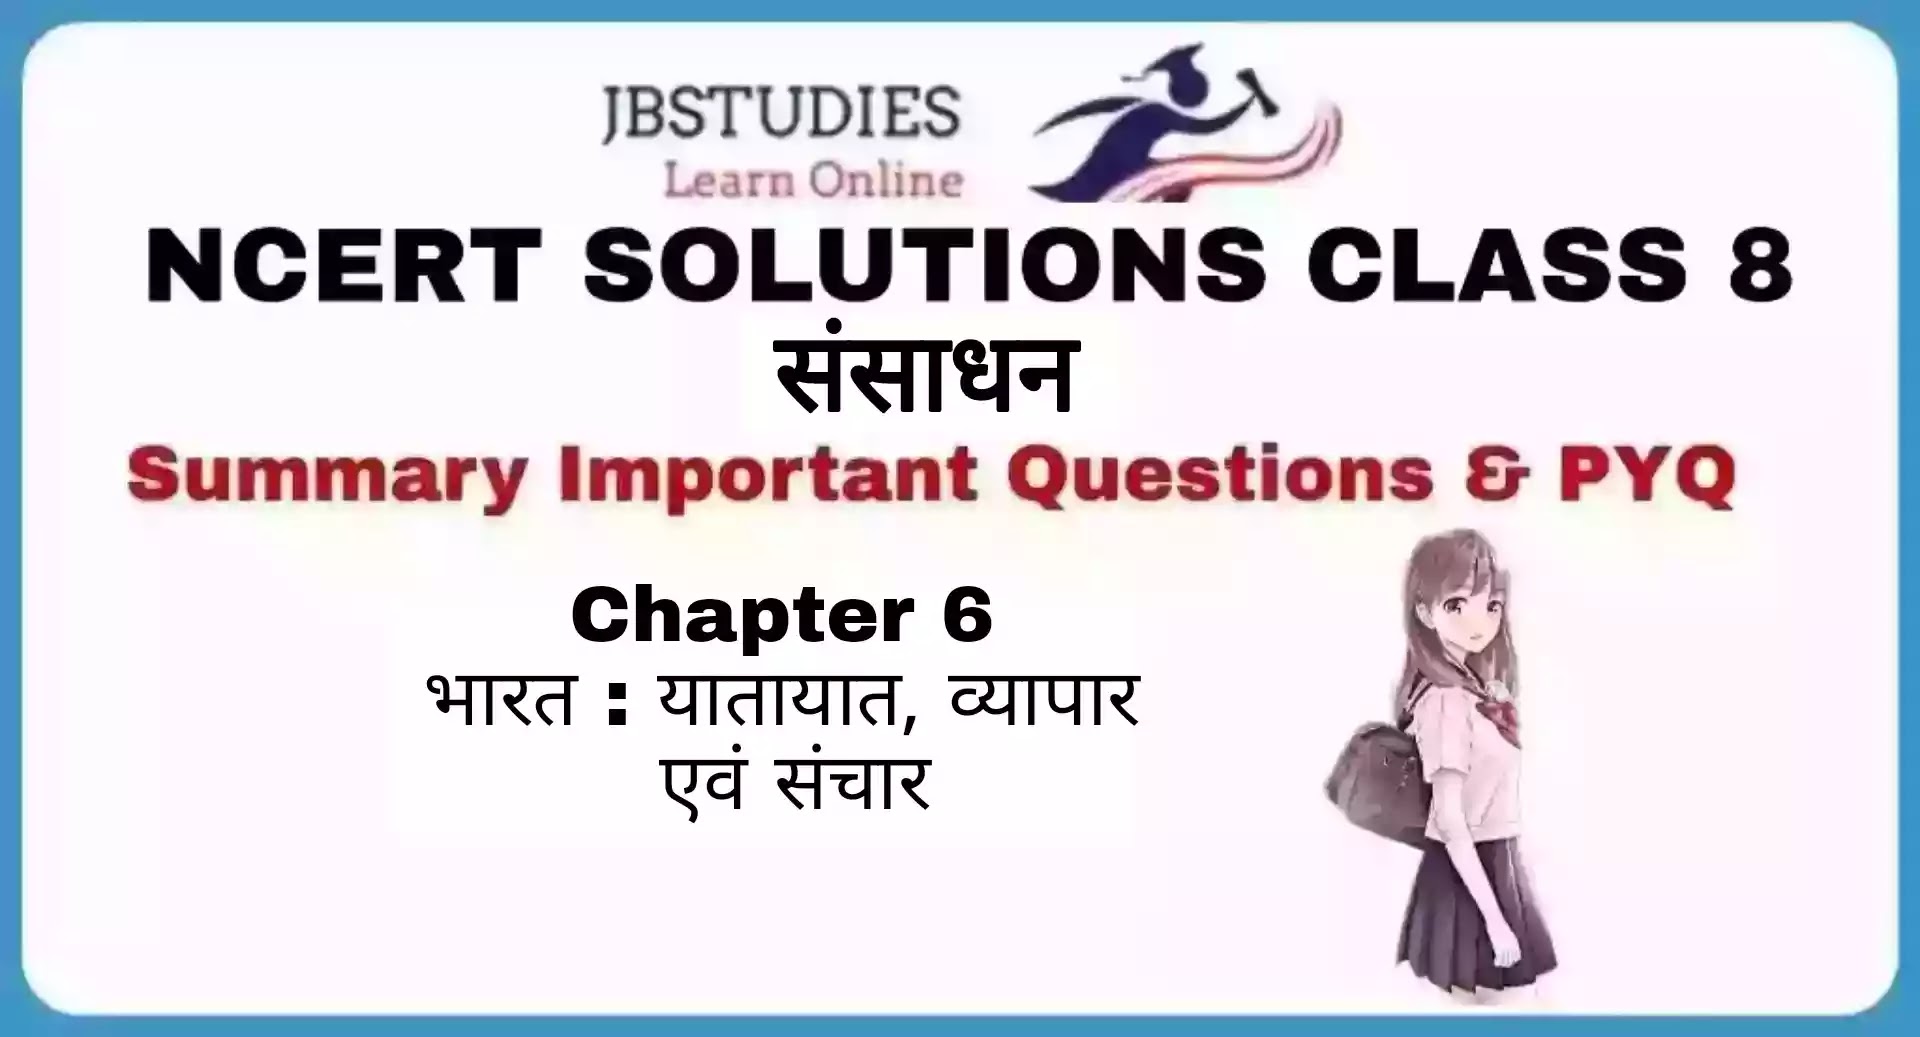 Solutions Class 8 संसाधन एवं विकाश Chapter- 6 (भारत : यातायात, व्यापार एवं संचार)